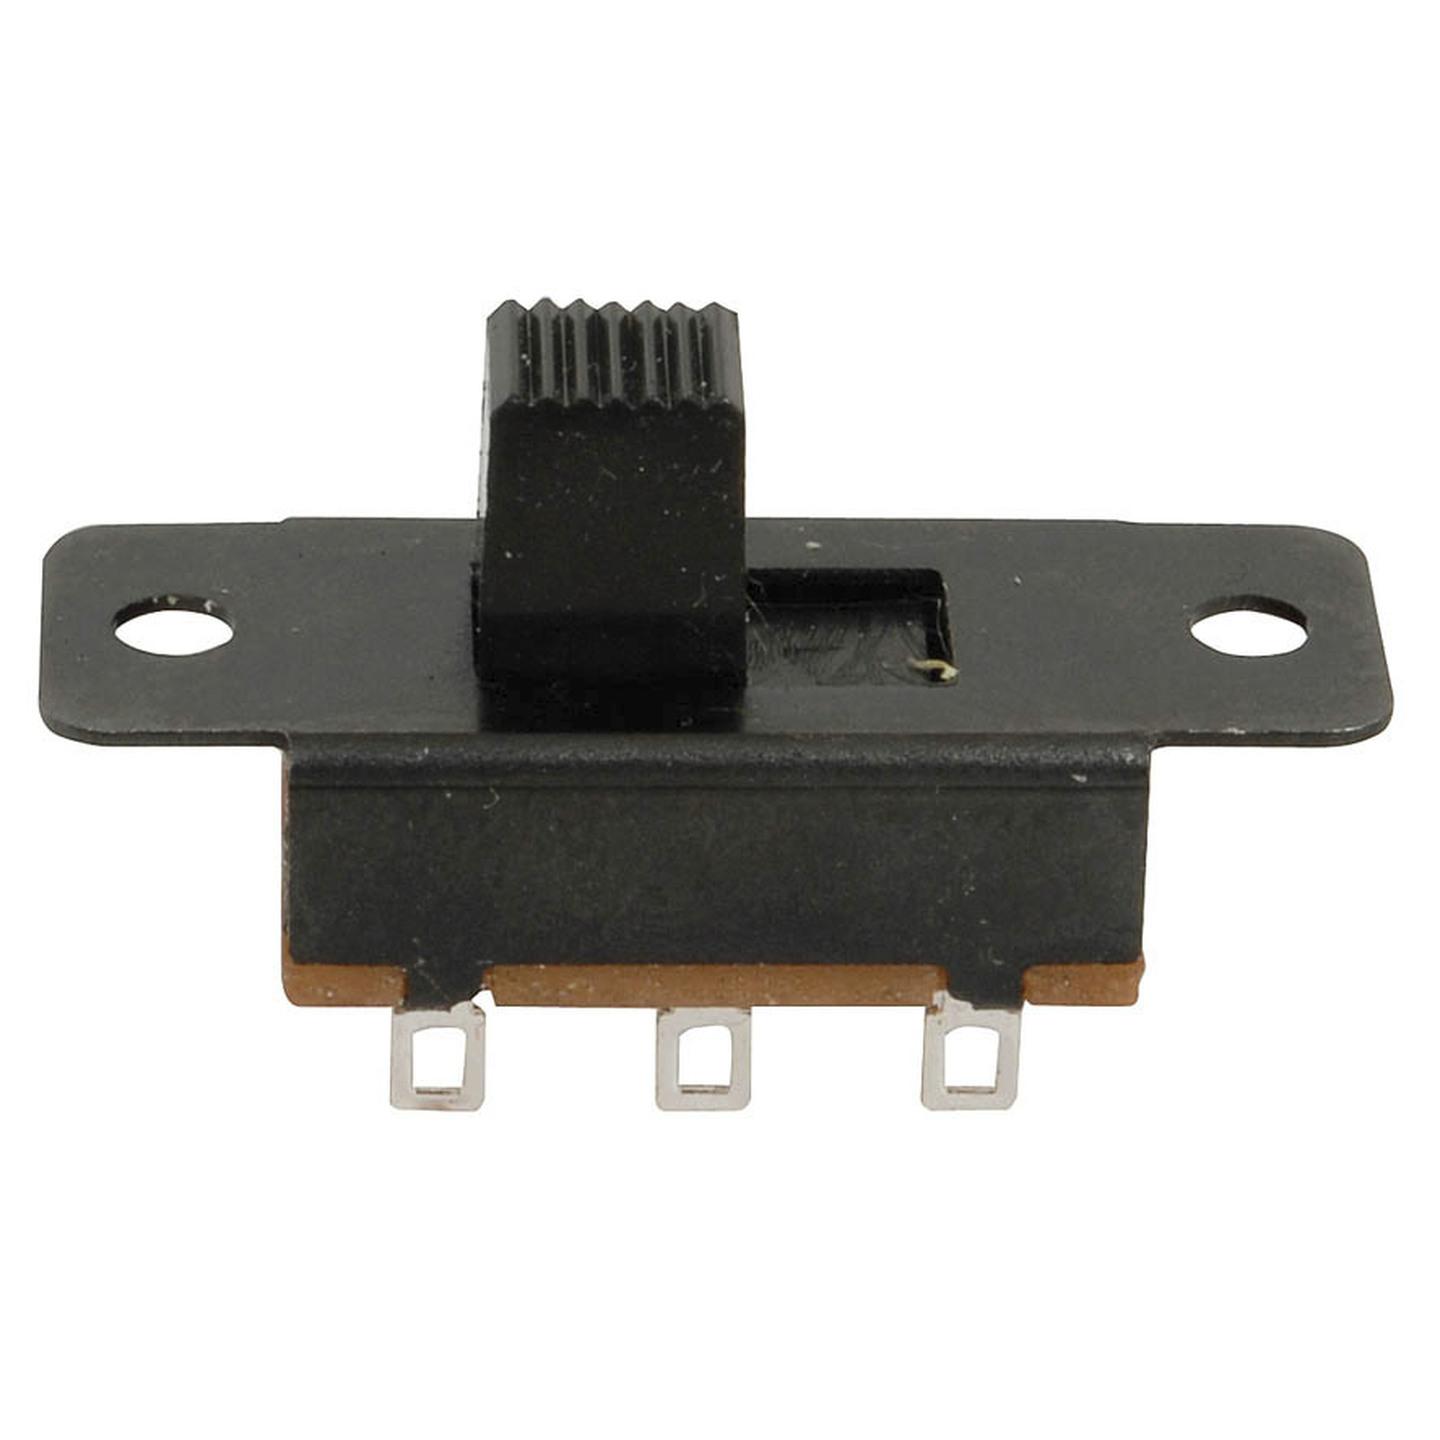 Miniature DPDT Panel Mount Switch